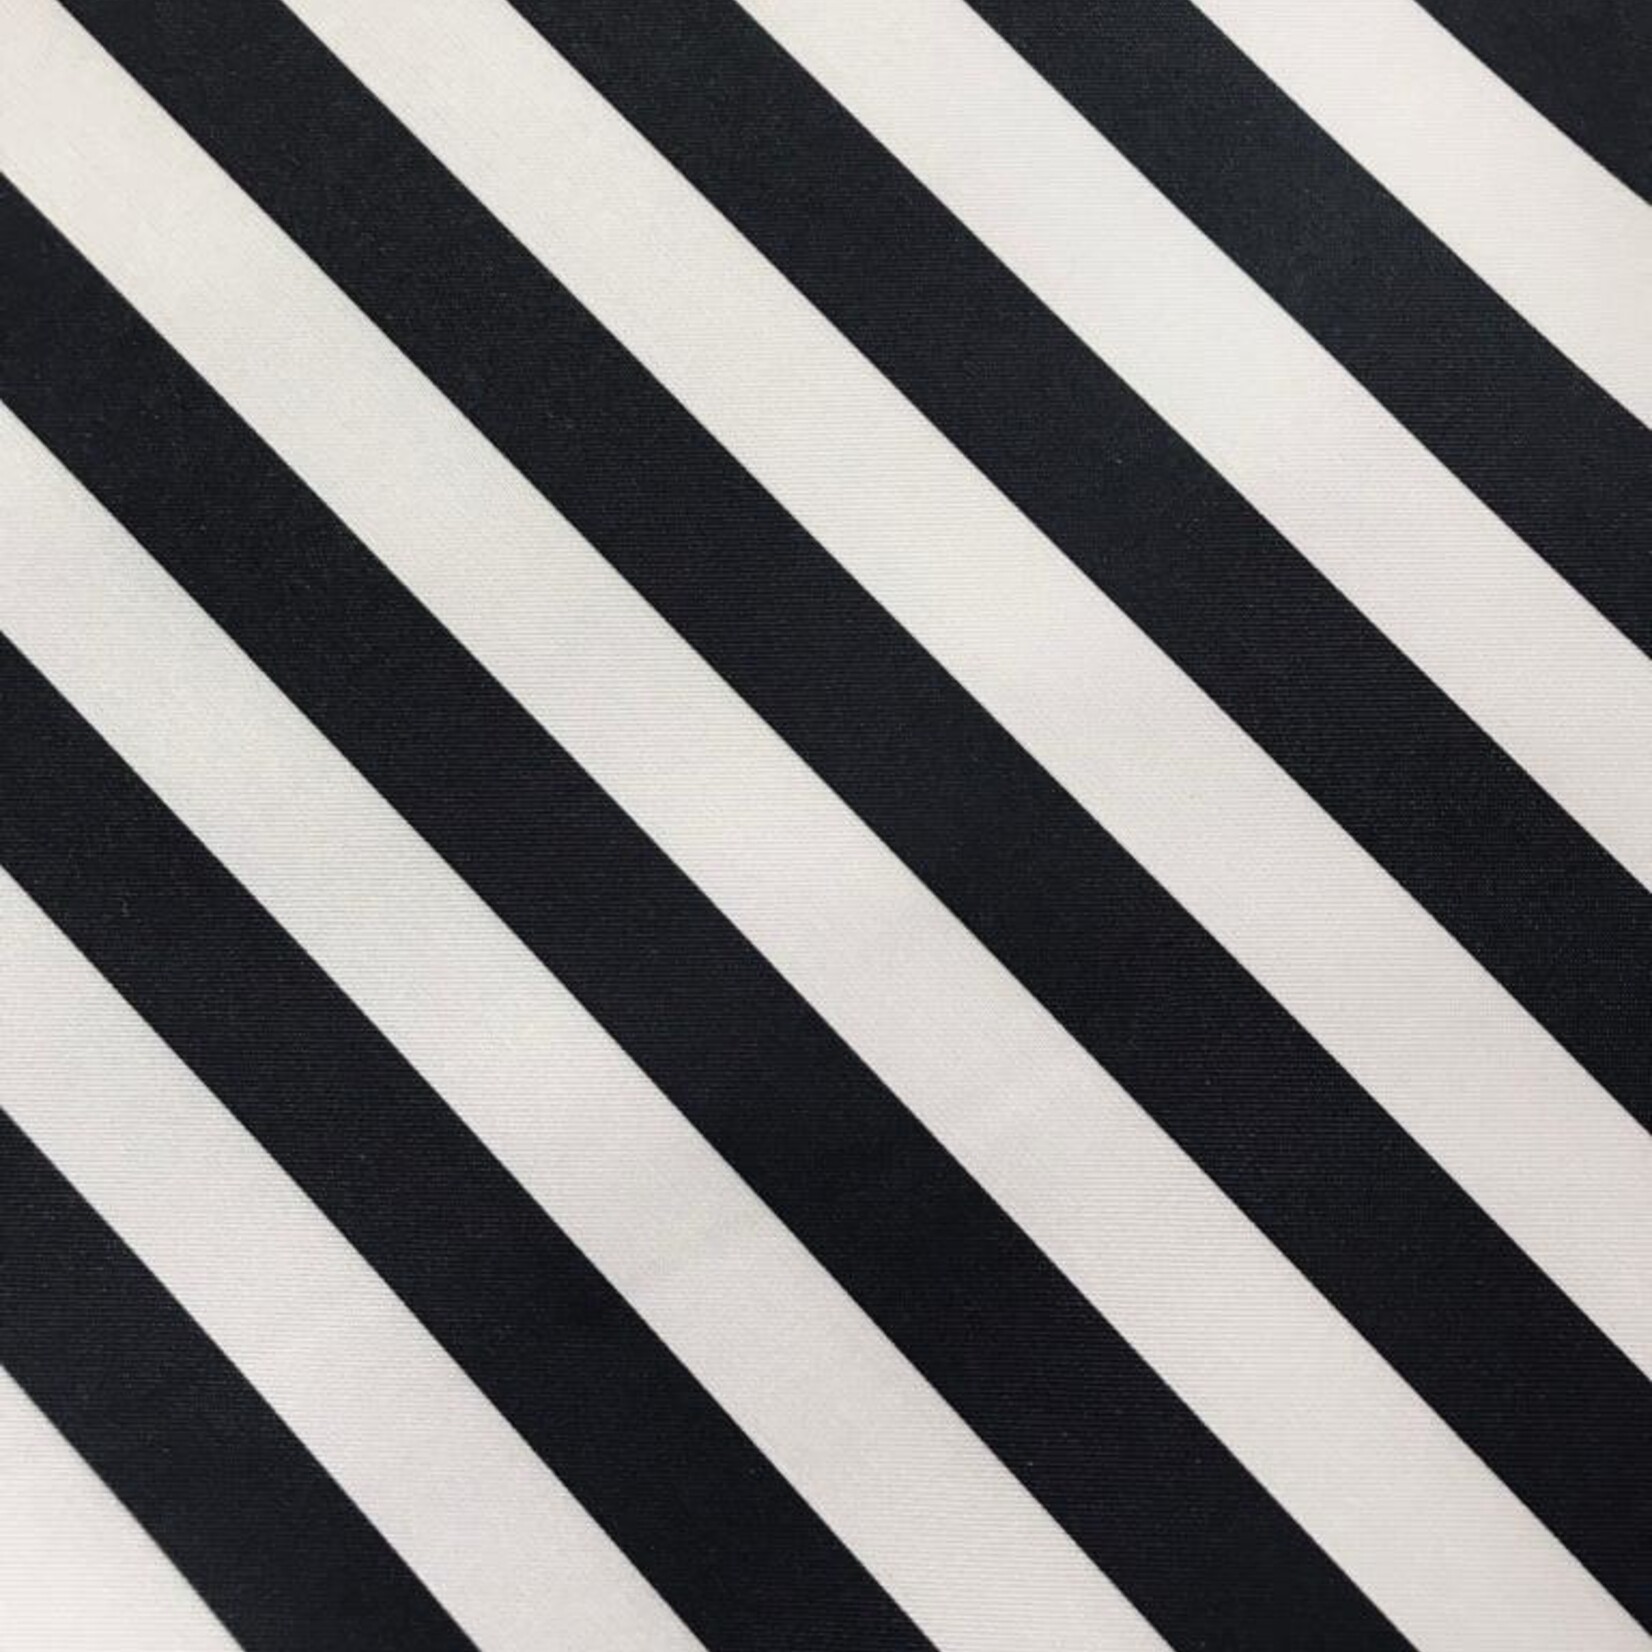 Satin Polyester 58 - 60 Inches Striped - White & Black